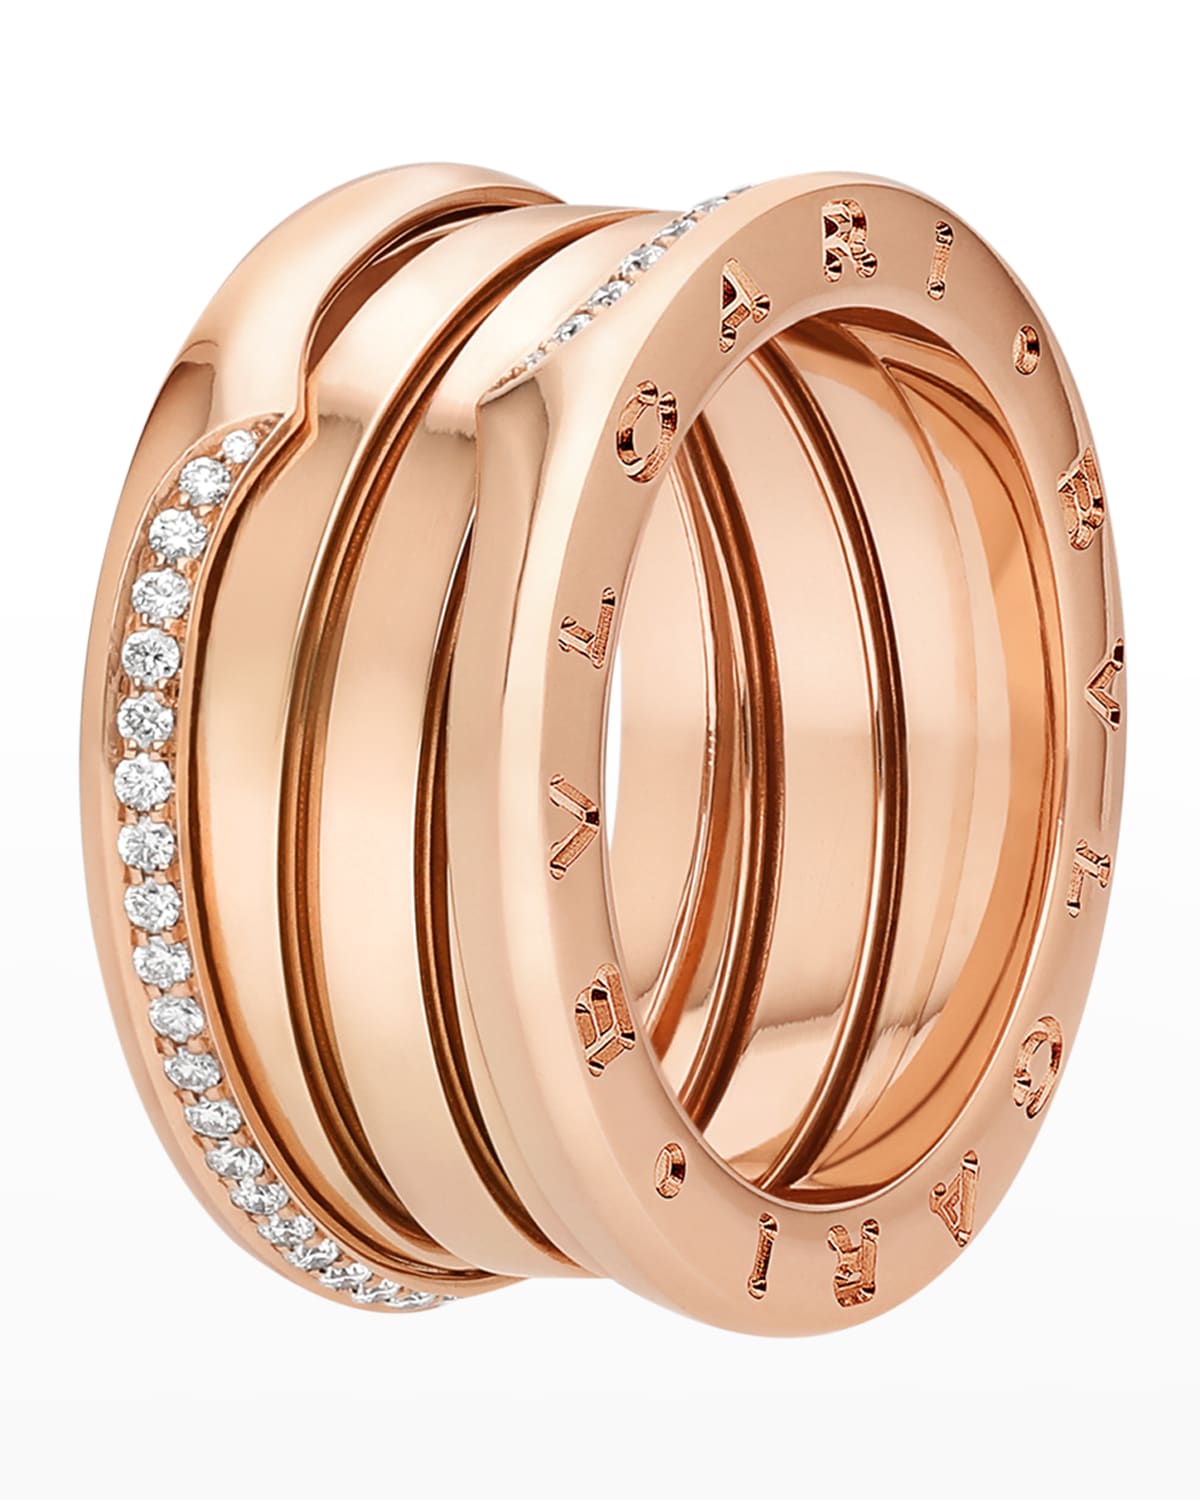 BVLGARI B.Zero1 Rose Gold 3-Band Wave Ring with Diamonds, Size 57